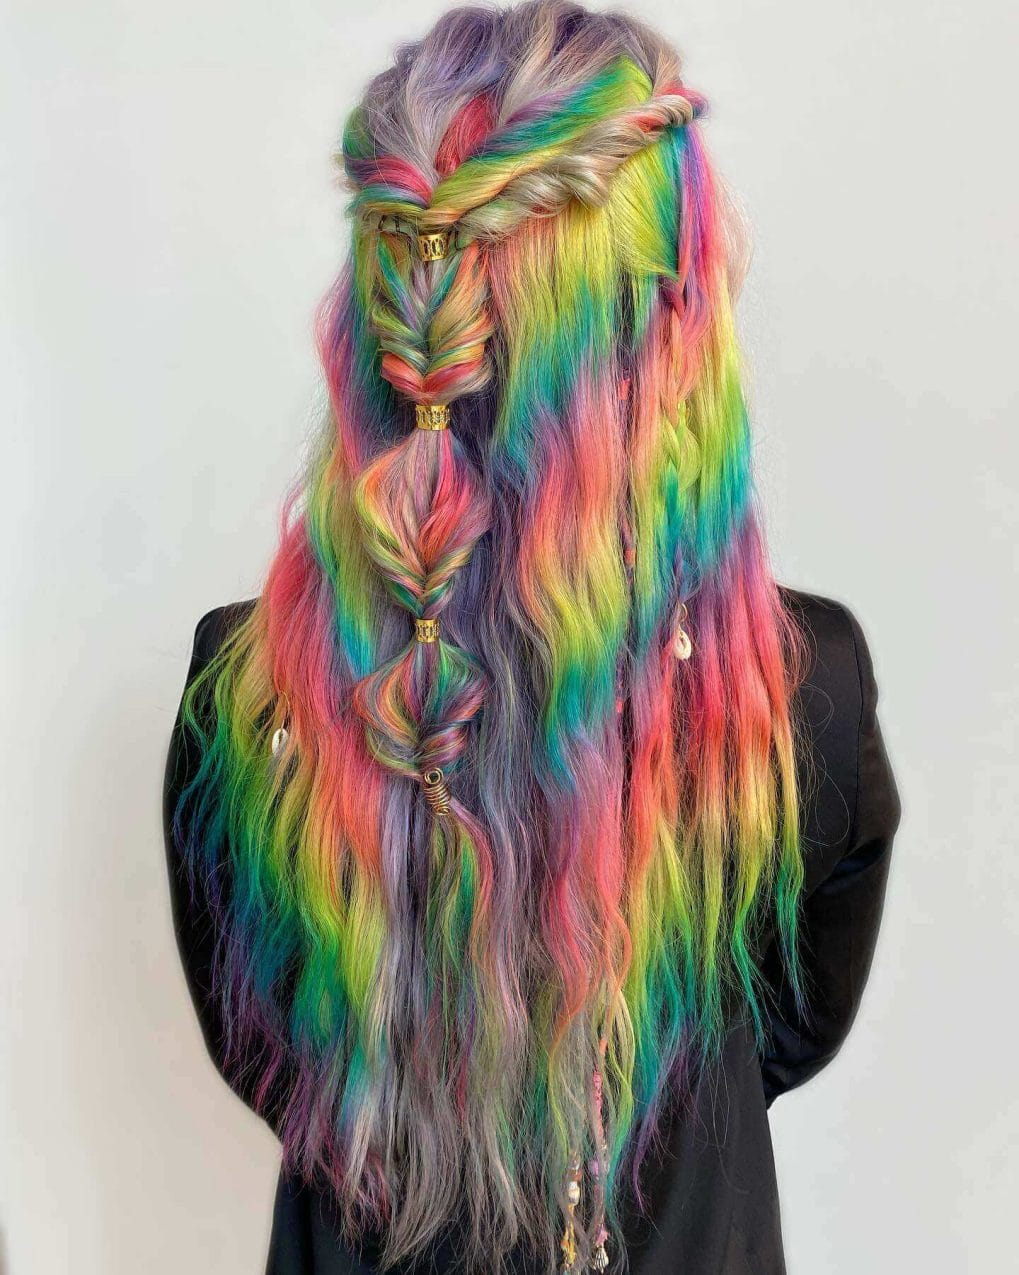 Bohemian rainbow braid in a multidimensional colorful mane.